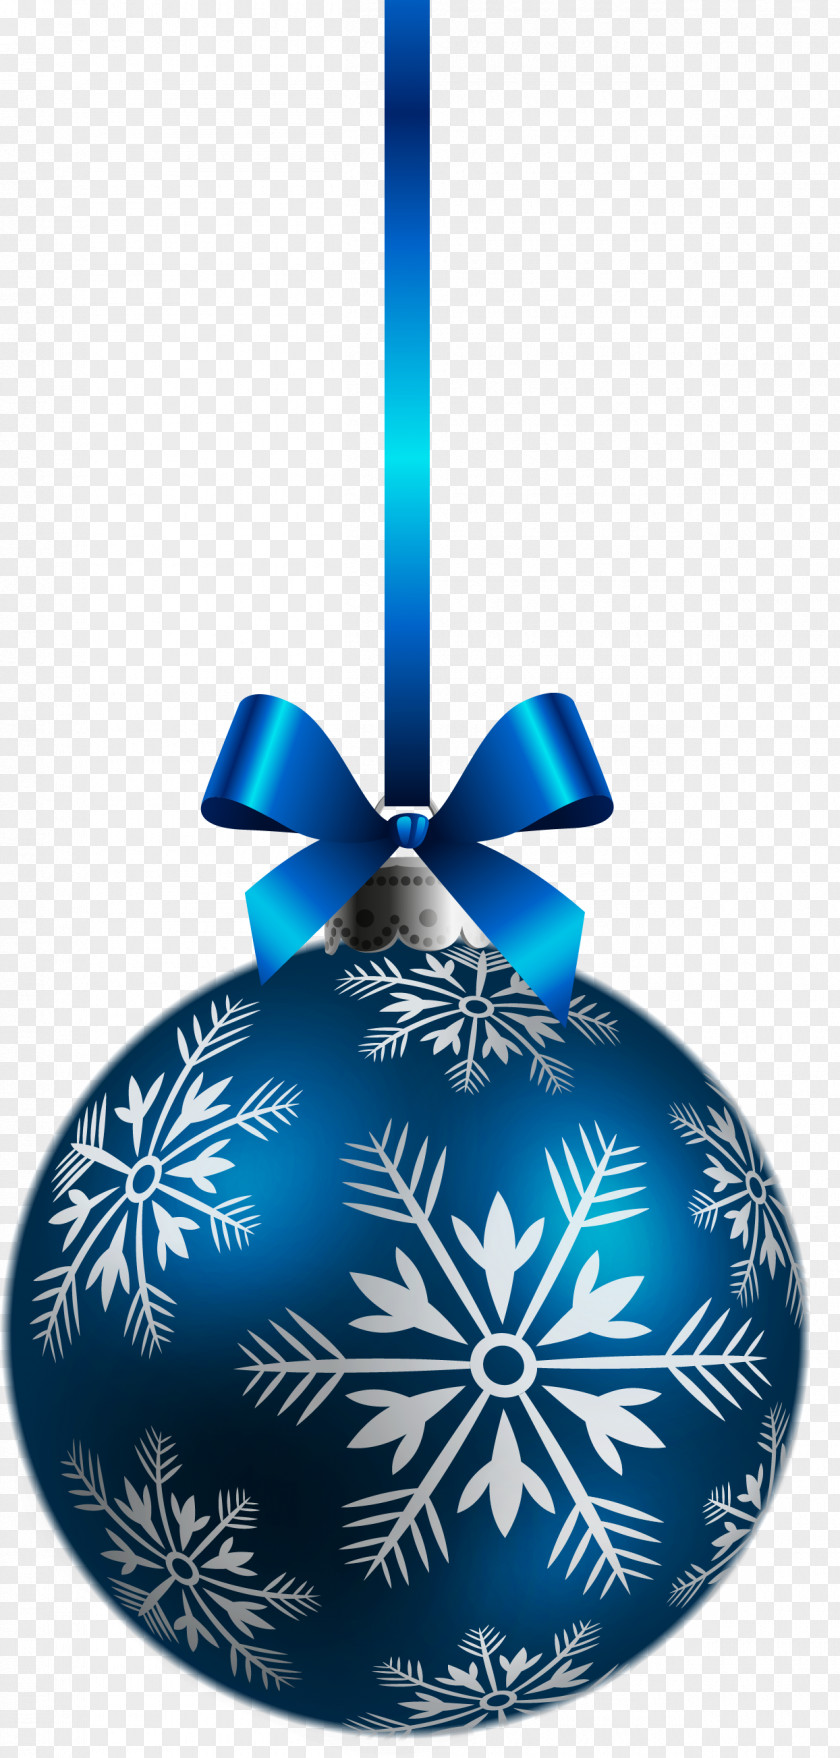 Large Transparent Blue Christmas Ball Ornament Clipart Decoration Clip Art PNG